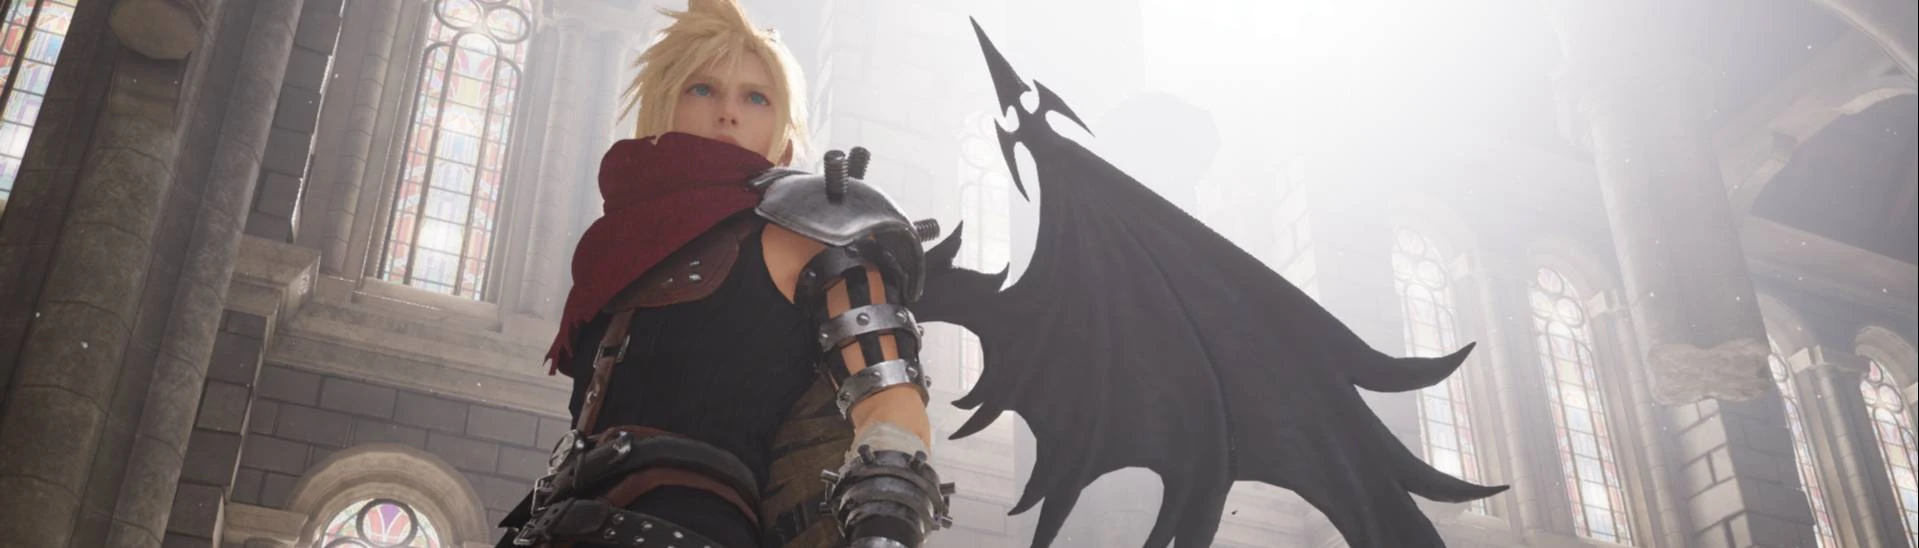 Tifa Replace Cloud at Final Fantasy VII Remake Nexus - Mods and community